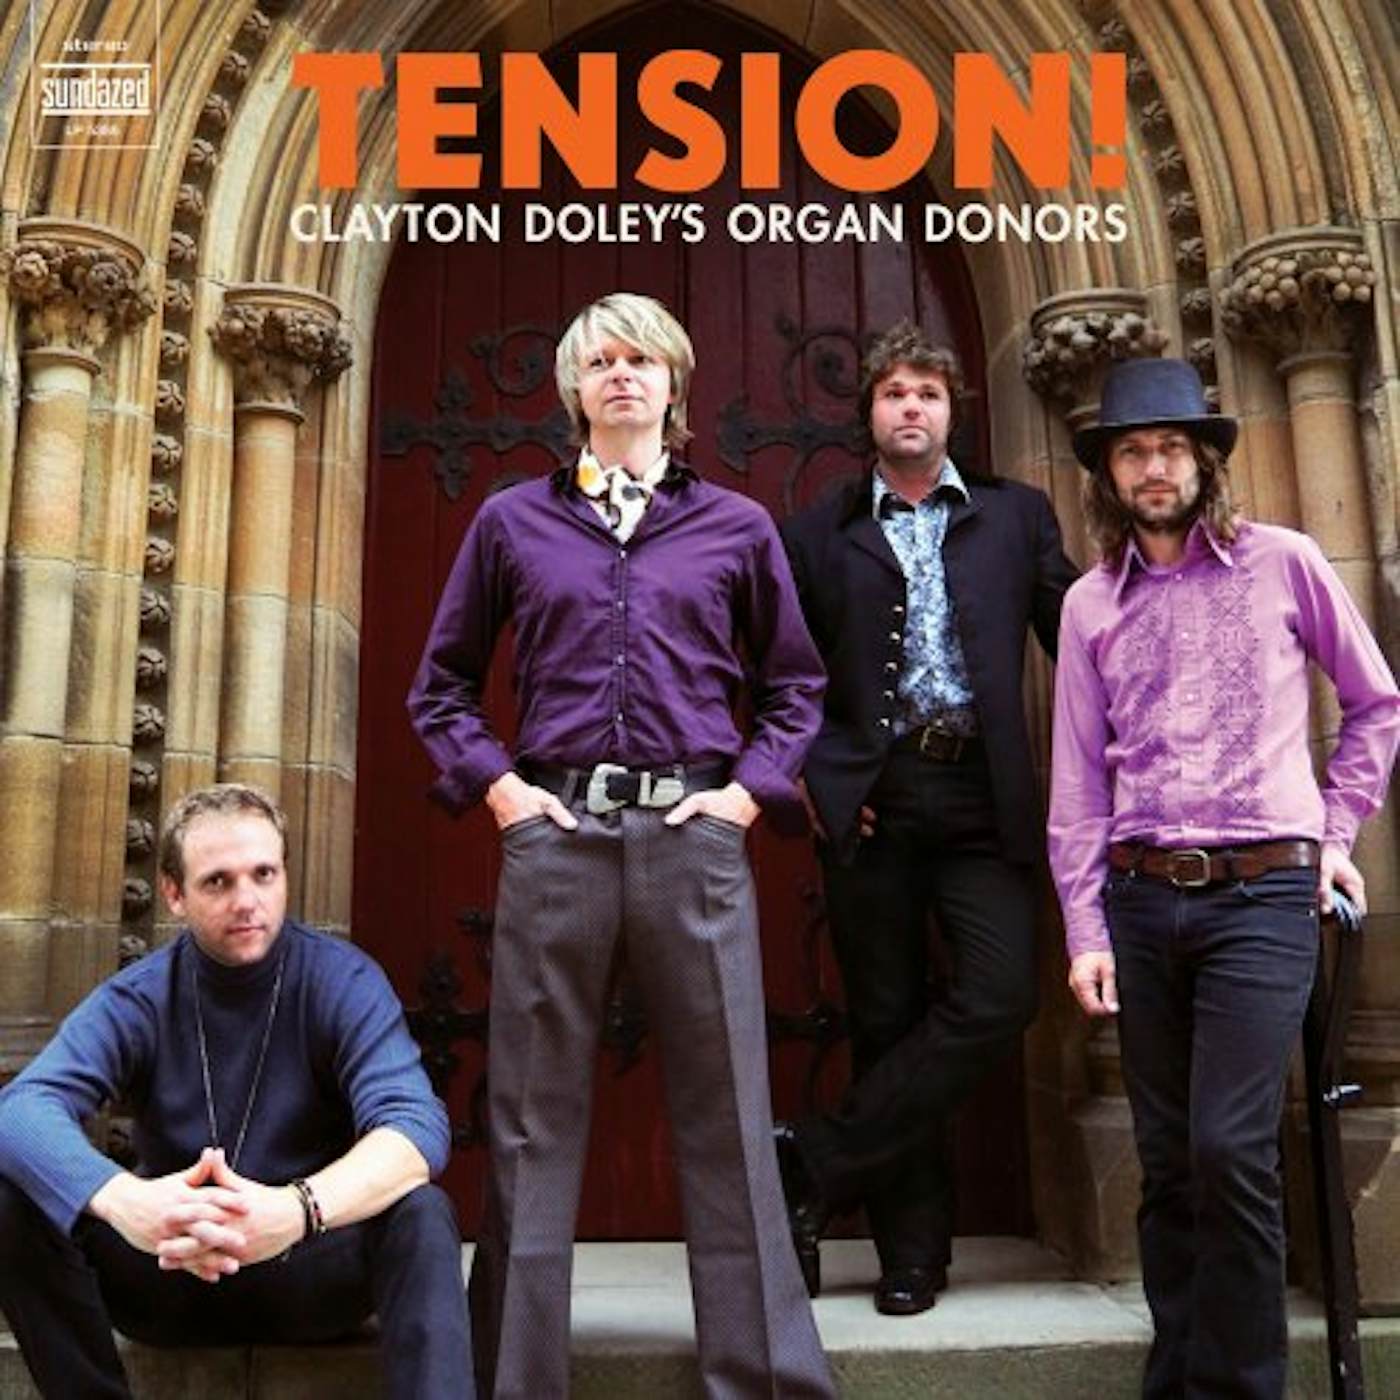 Clayton Doley's Organ Donors Tension Vinyl Record